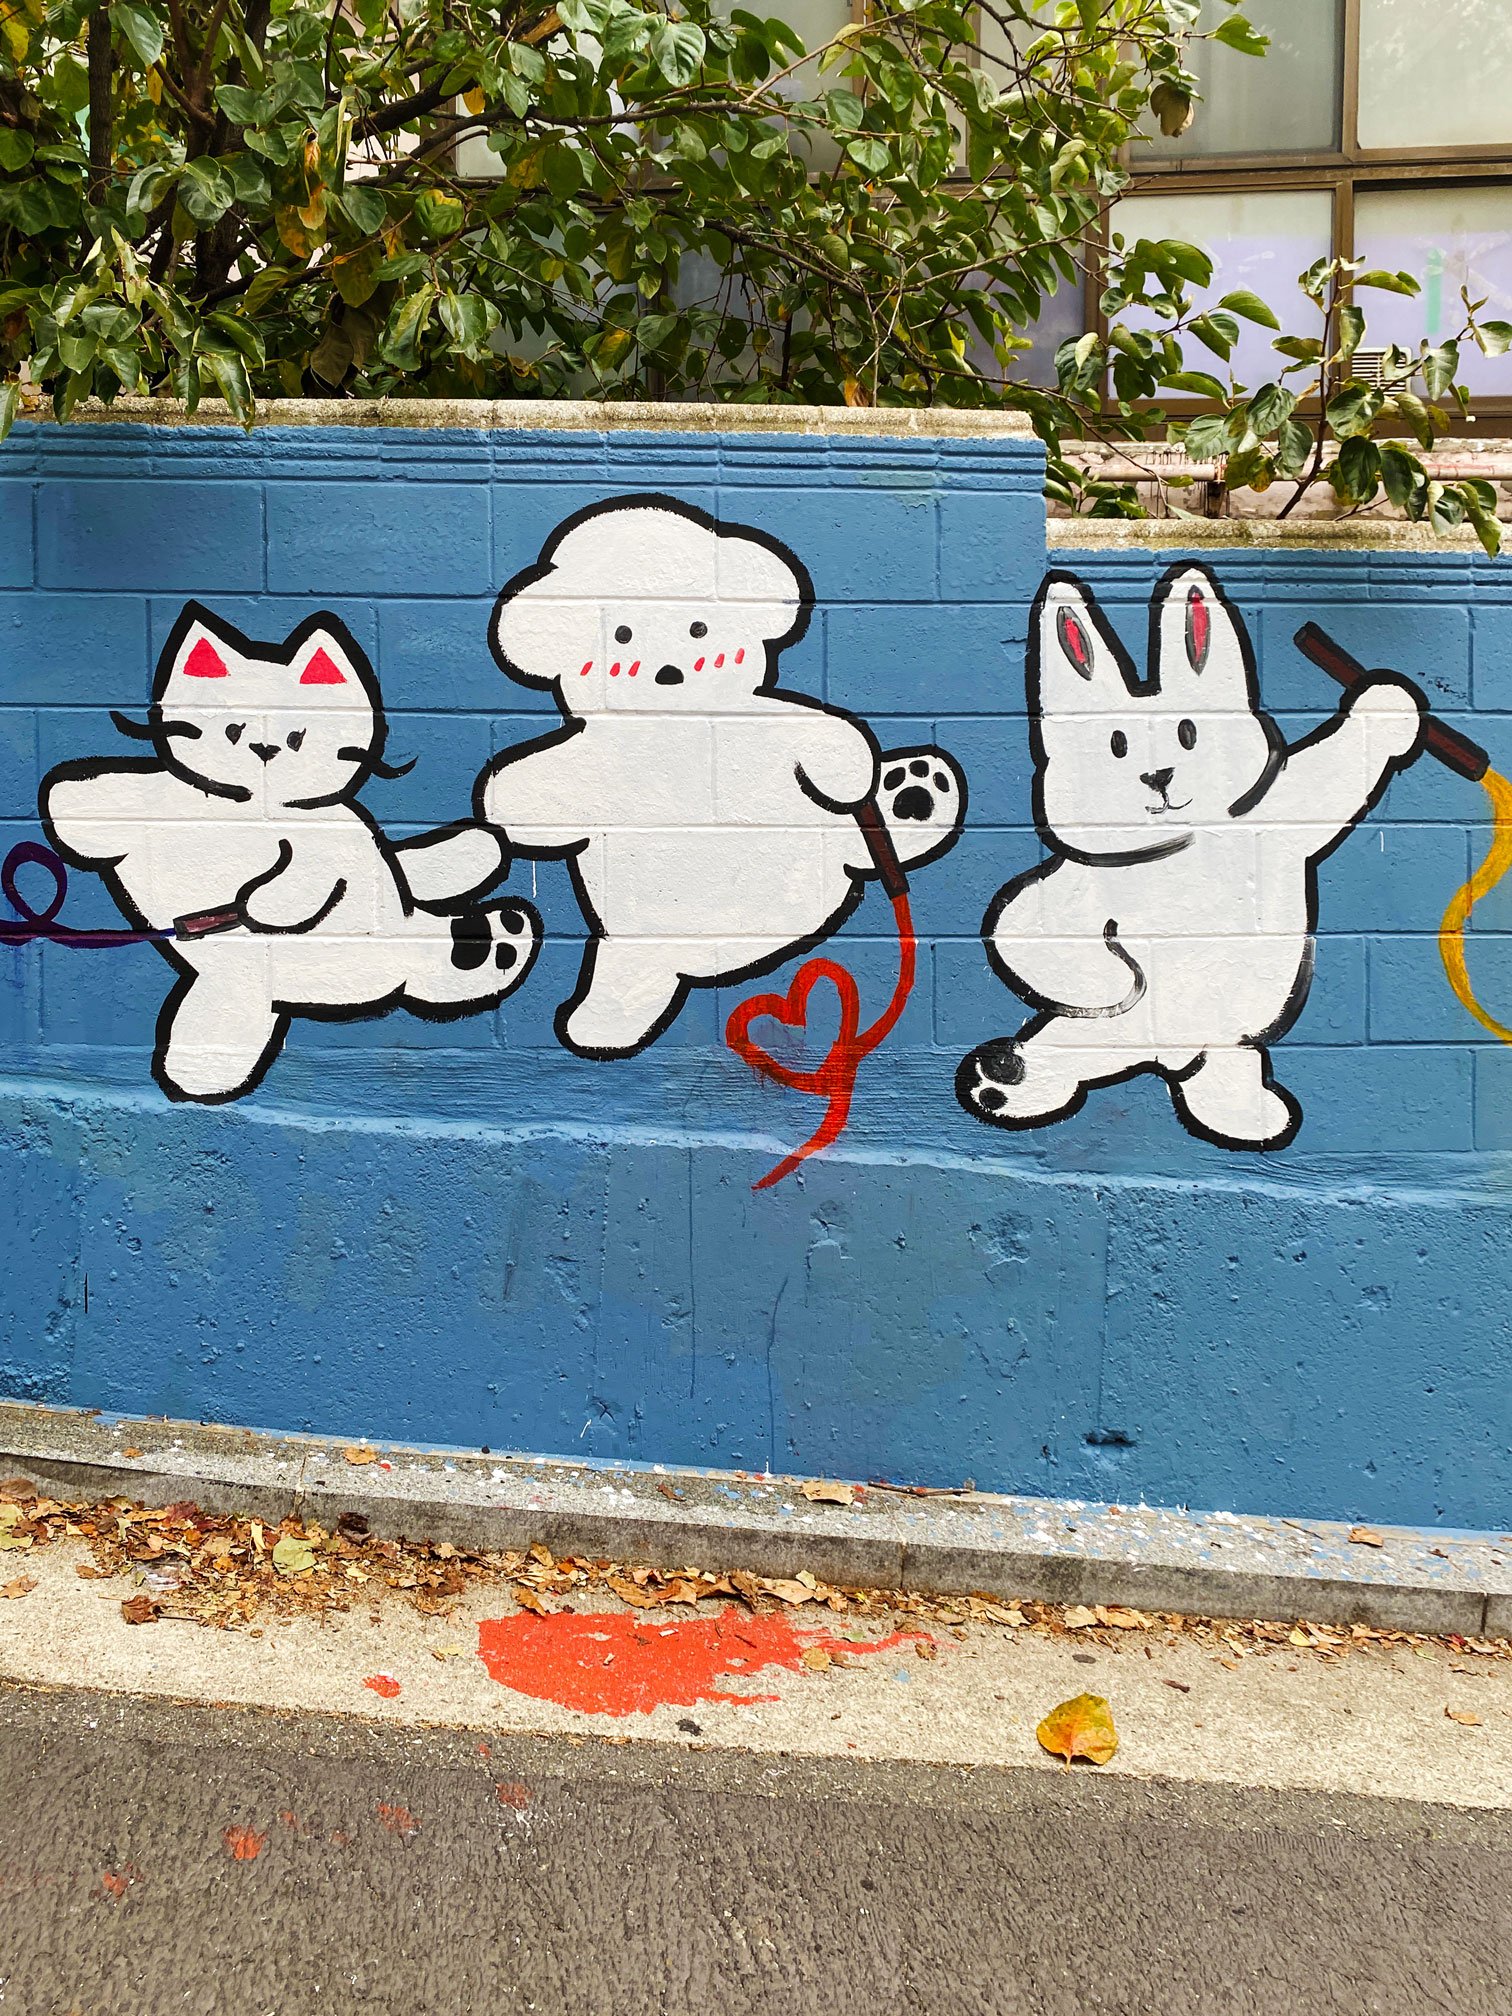 mural2-itaewon.jpg